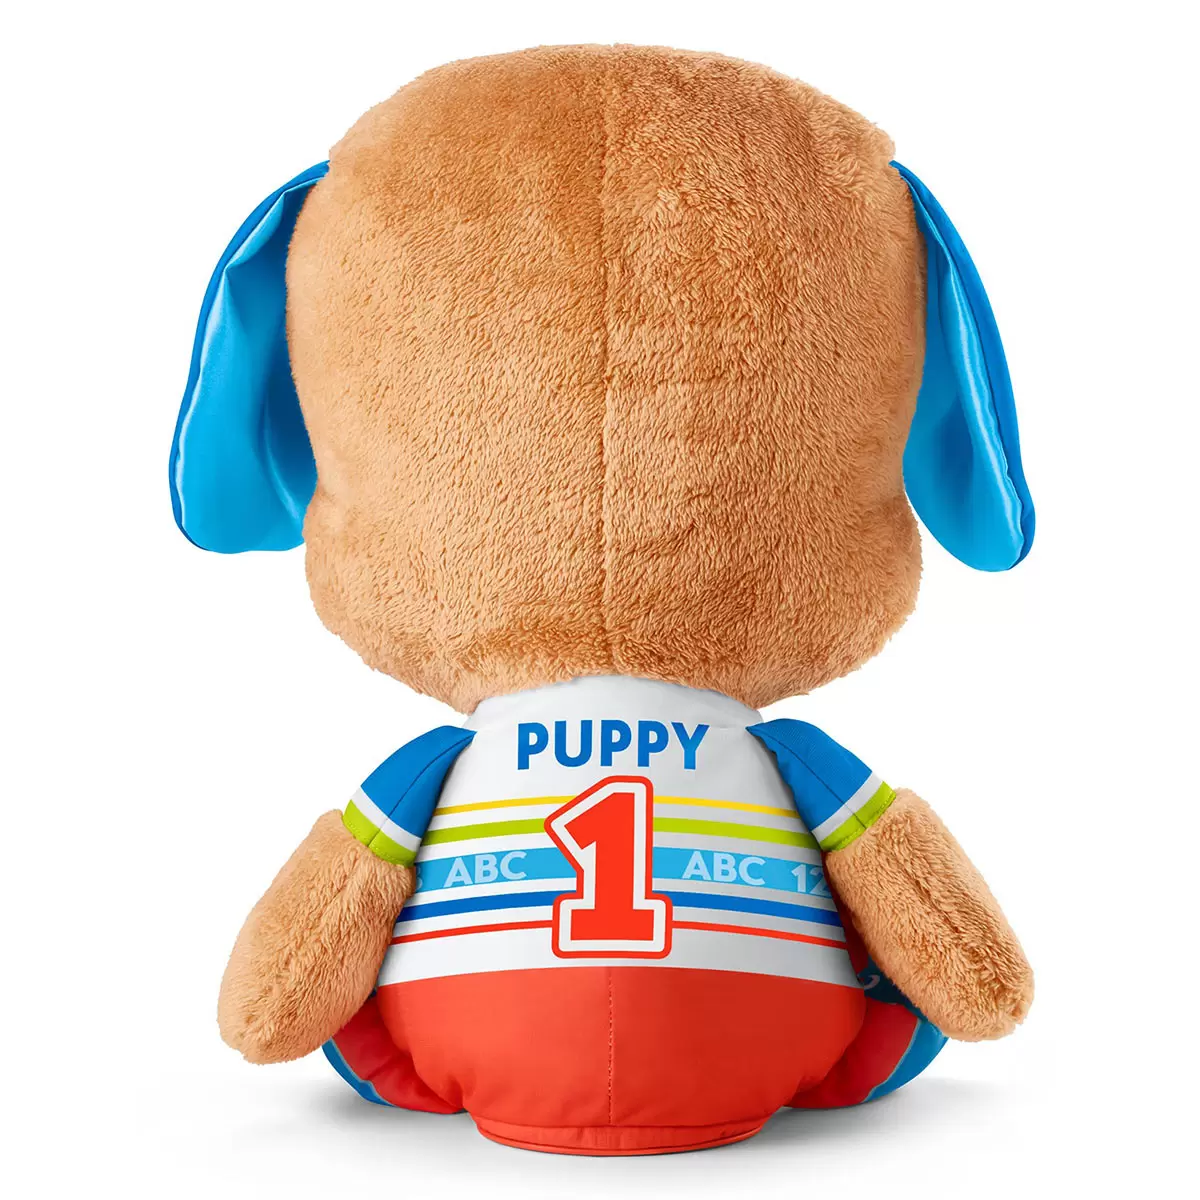 Buy So Big Puppy Back Image at Costco.co.uk